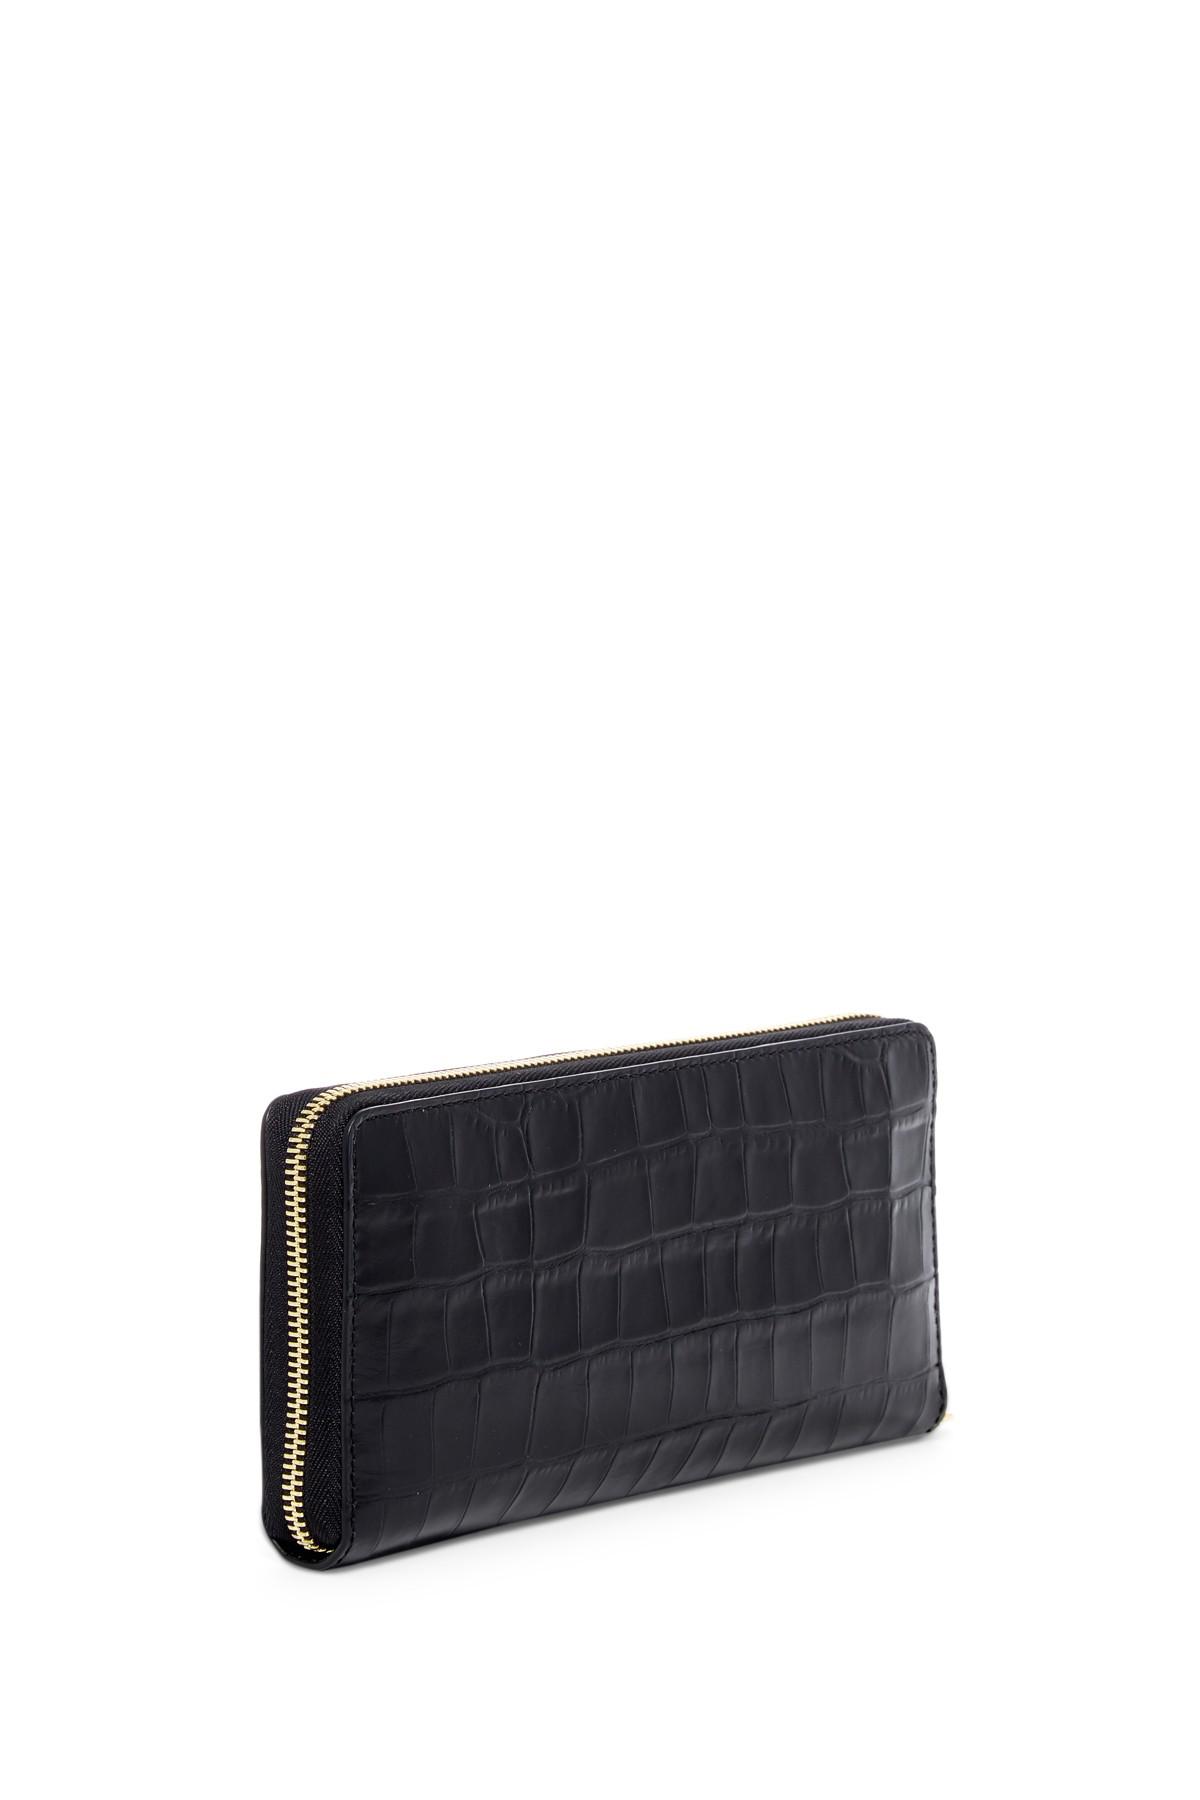 Michael Kors Black Patent Leather Zip Around Wallet Michael Kors